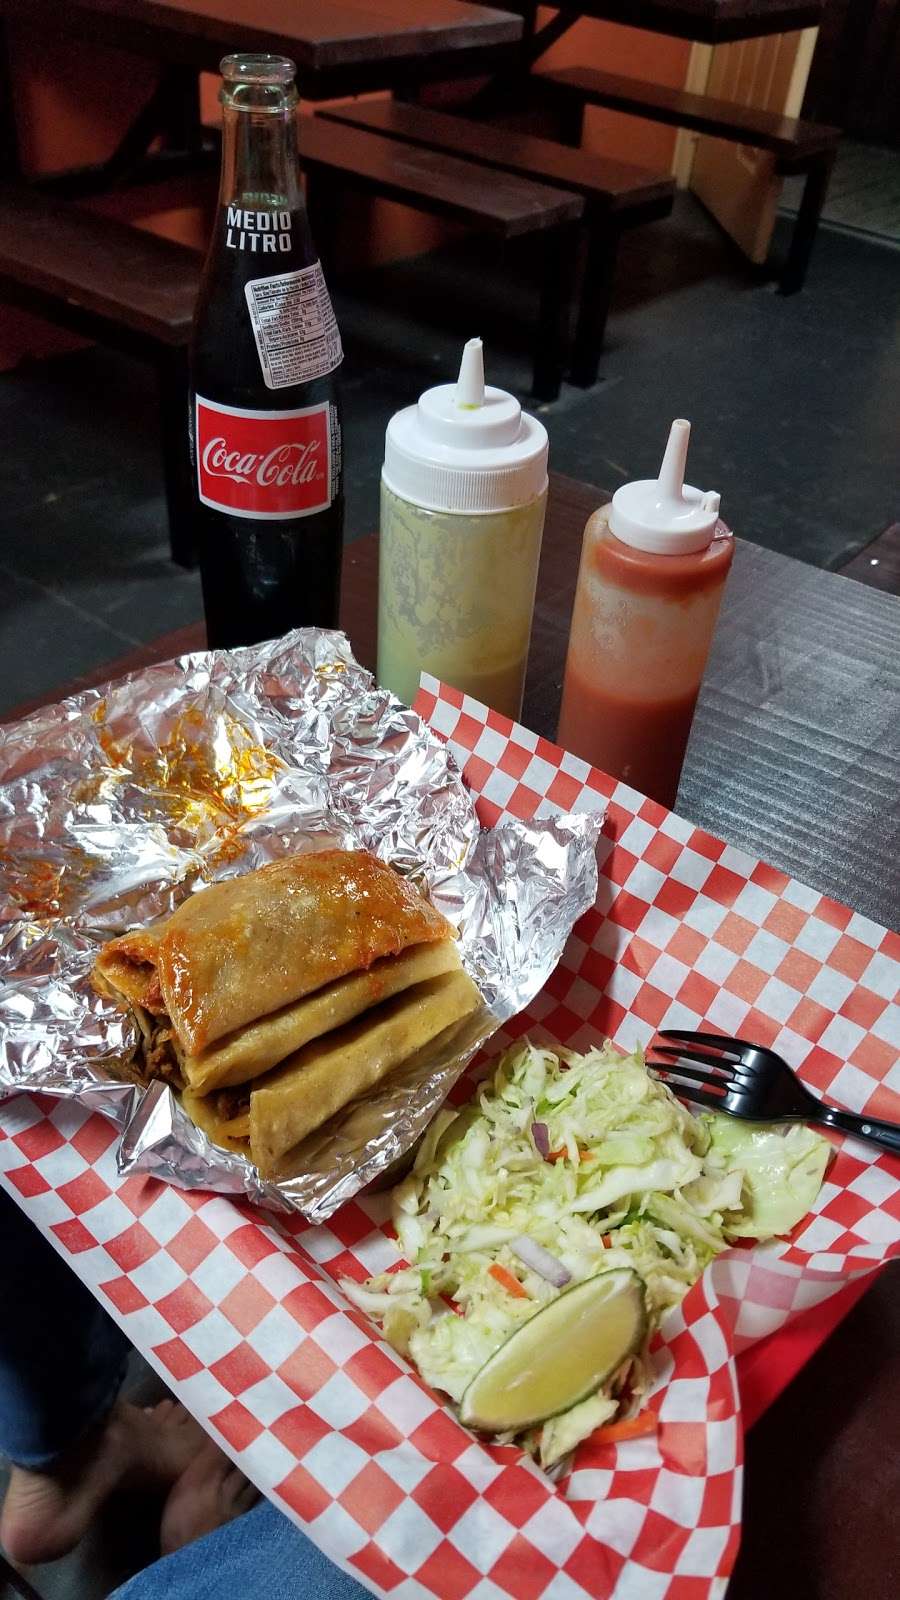 REGIOS Tacos A Vapor | 2000 Cupples Rd, San Antonio, TX 78226, USA | Phone: (832) 651-7789